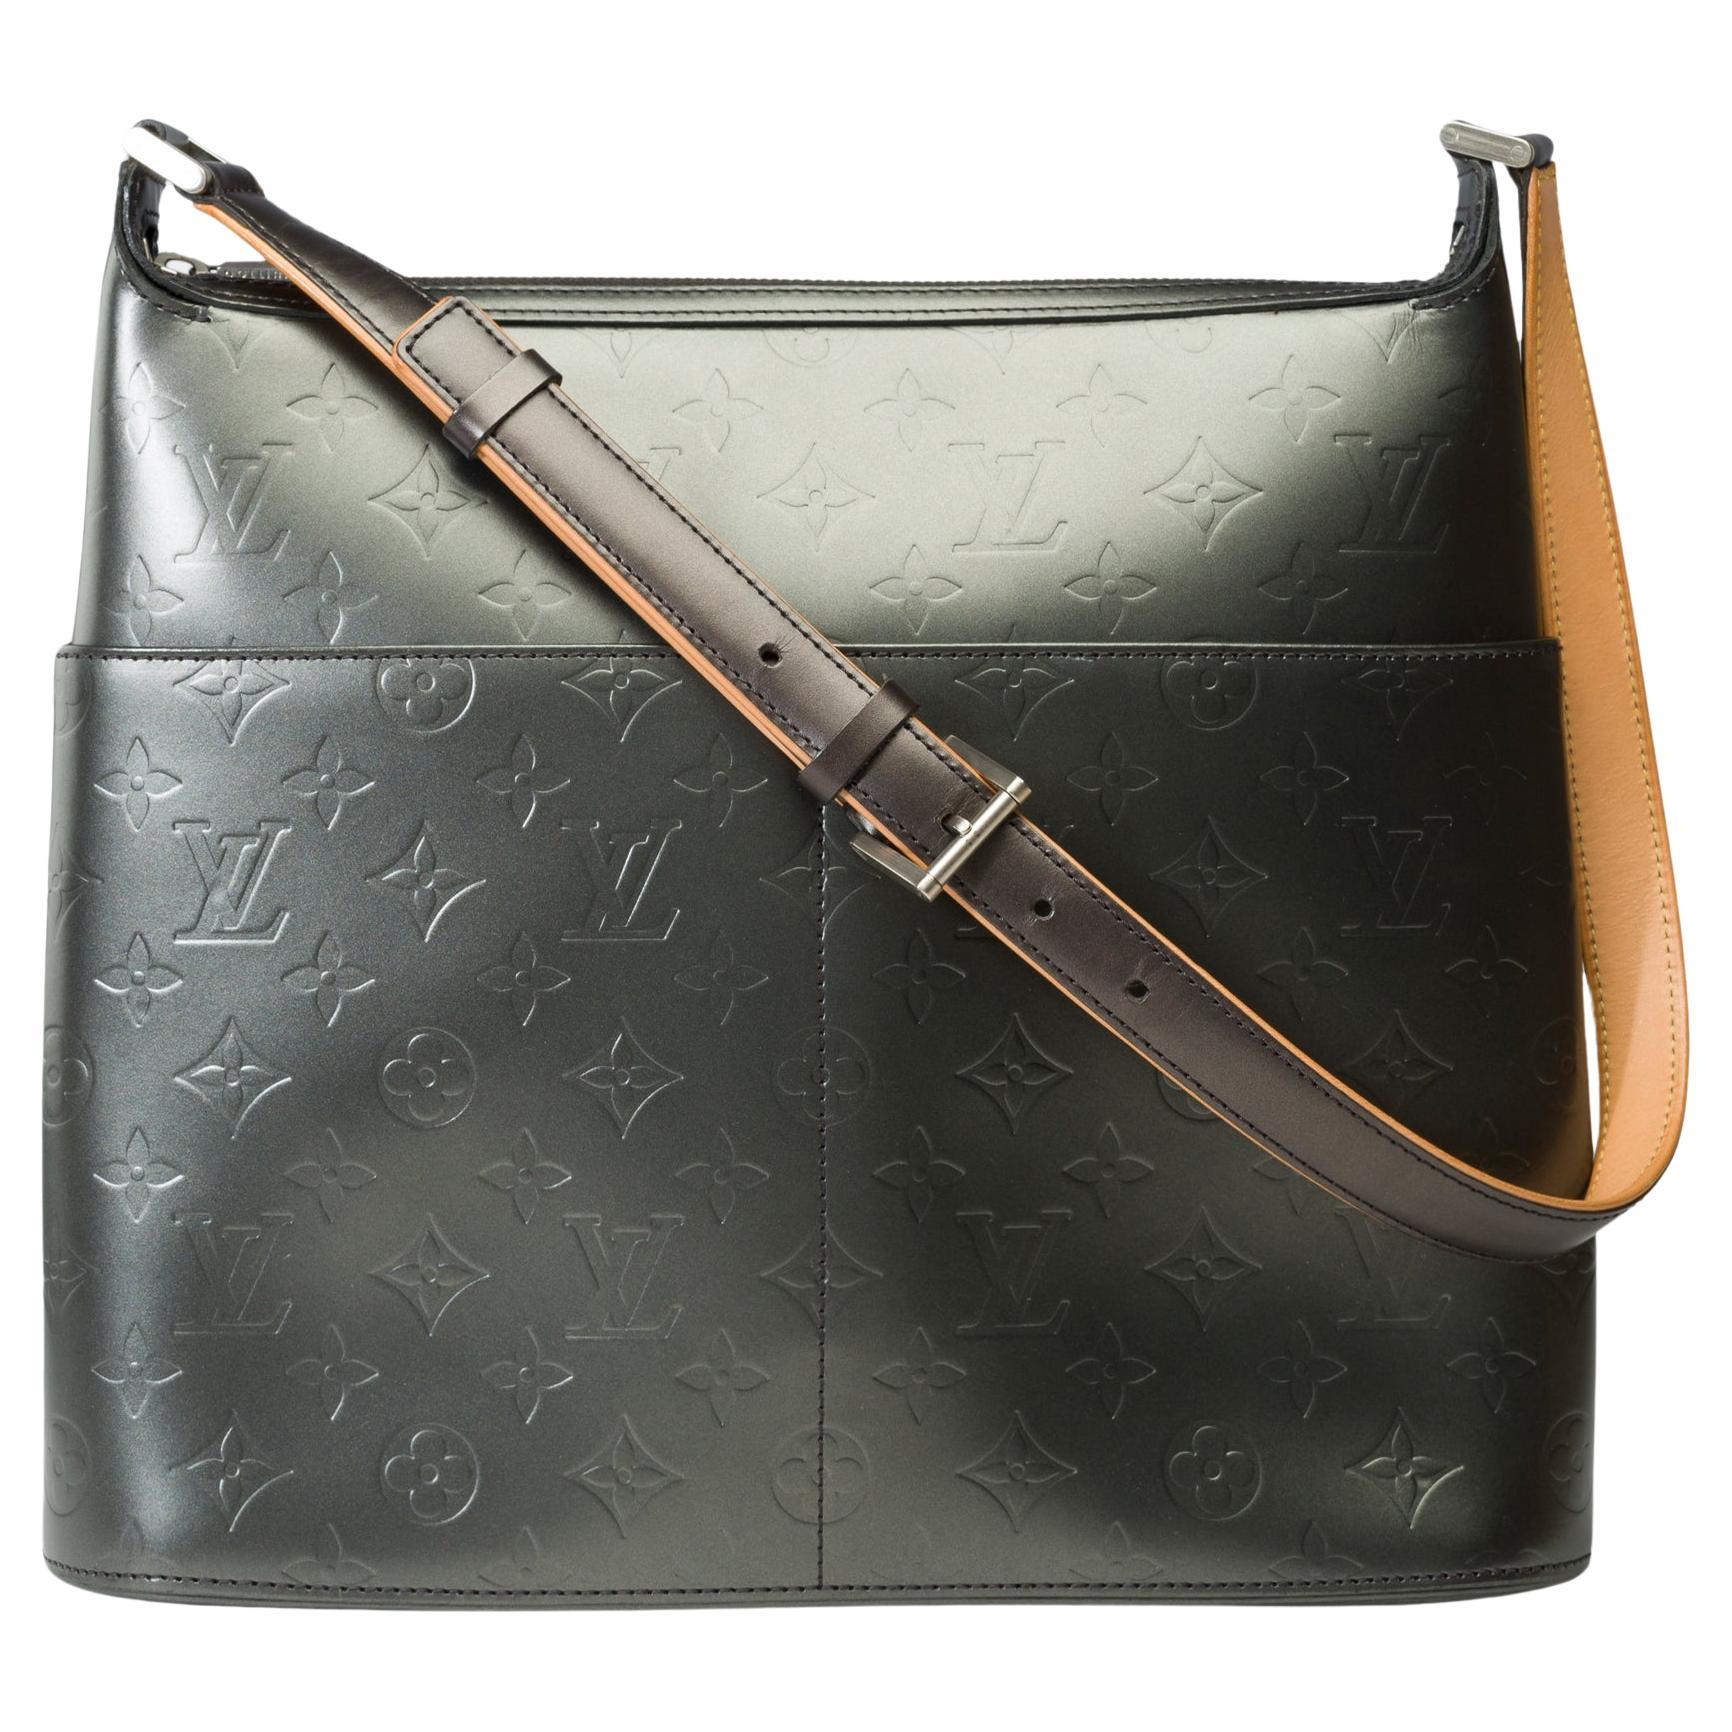 Louis Vuitton Sutter shoulder bag in silver monogram leather, SHW For Sale